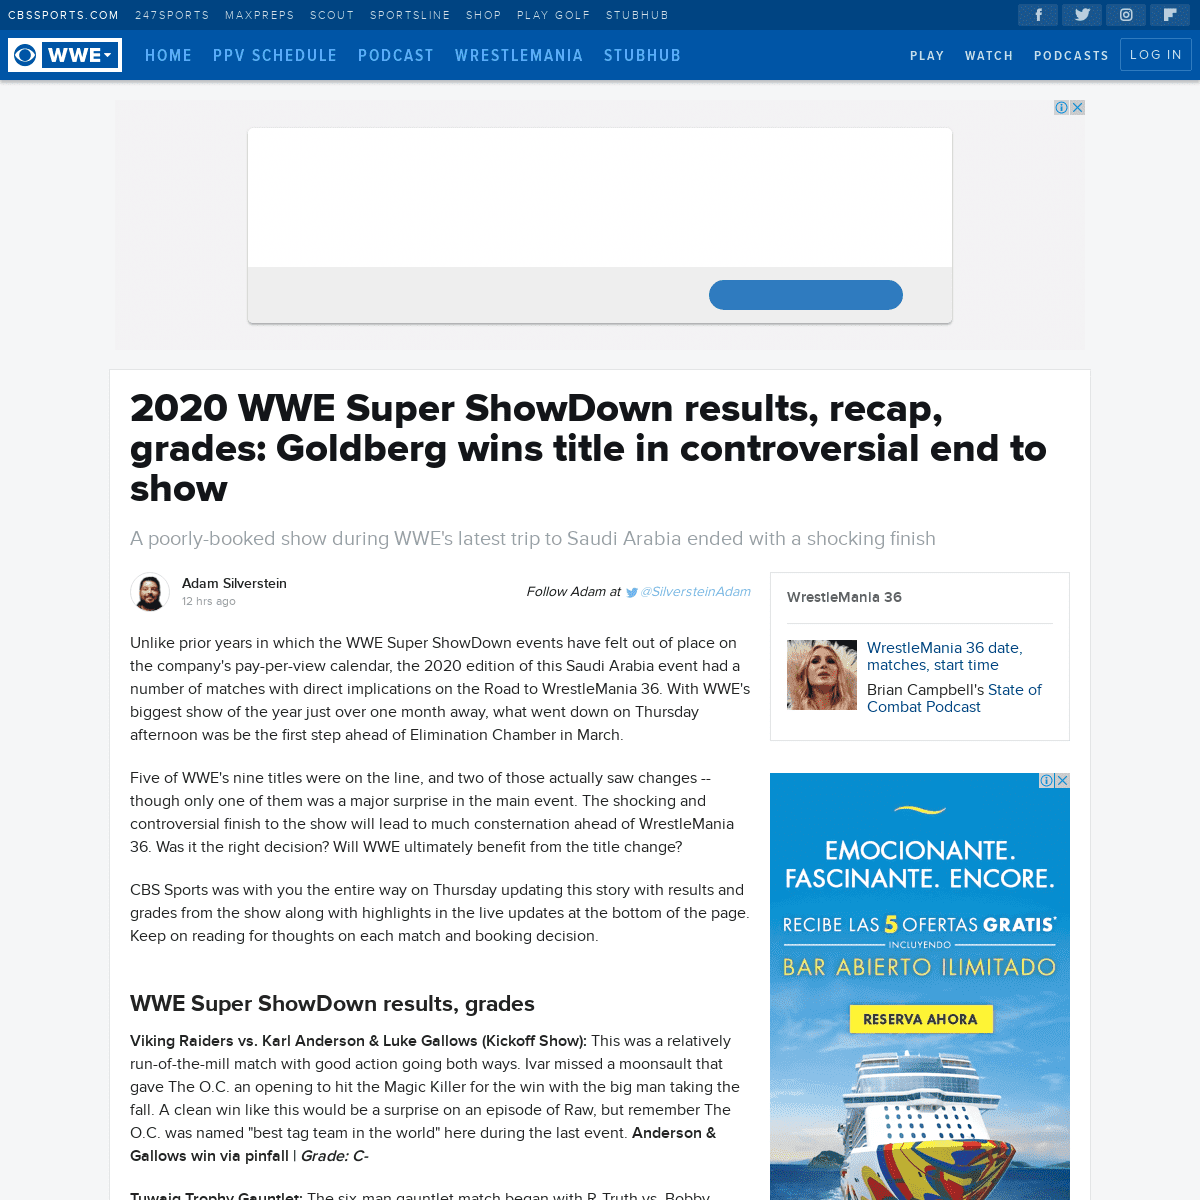 A complete backup of www.cbssports.com/wwe/news/2020-wwe-super-showdown-results-live-updates-recap-grades-matches-card-start-tim